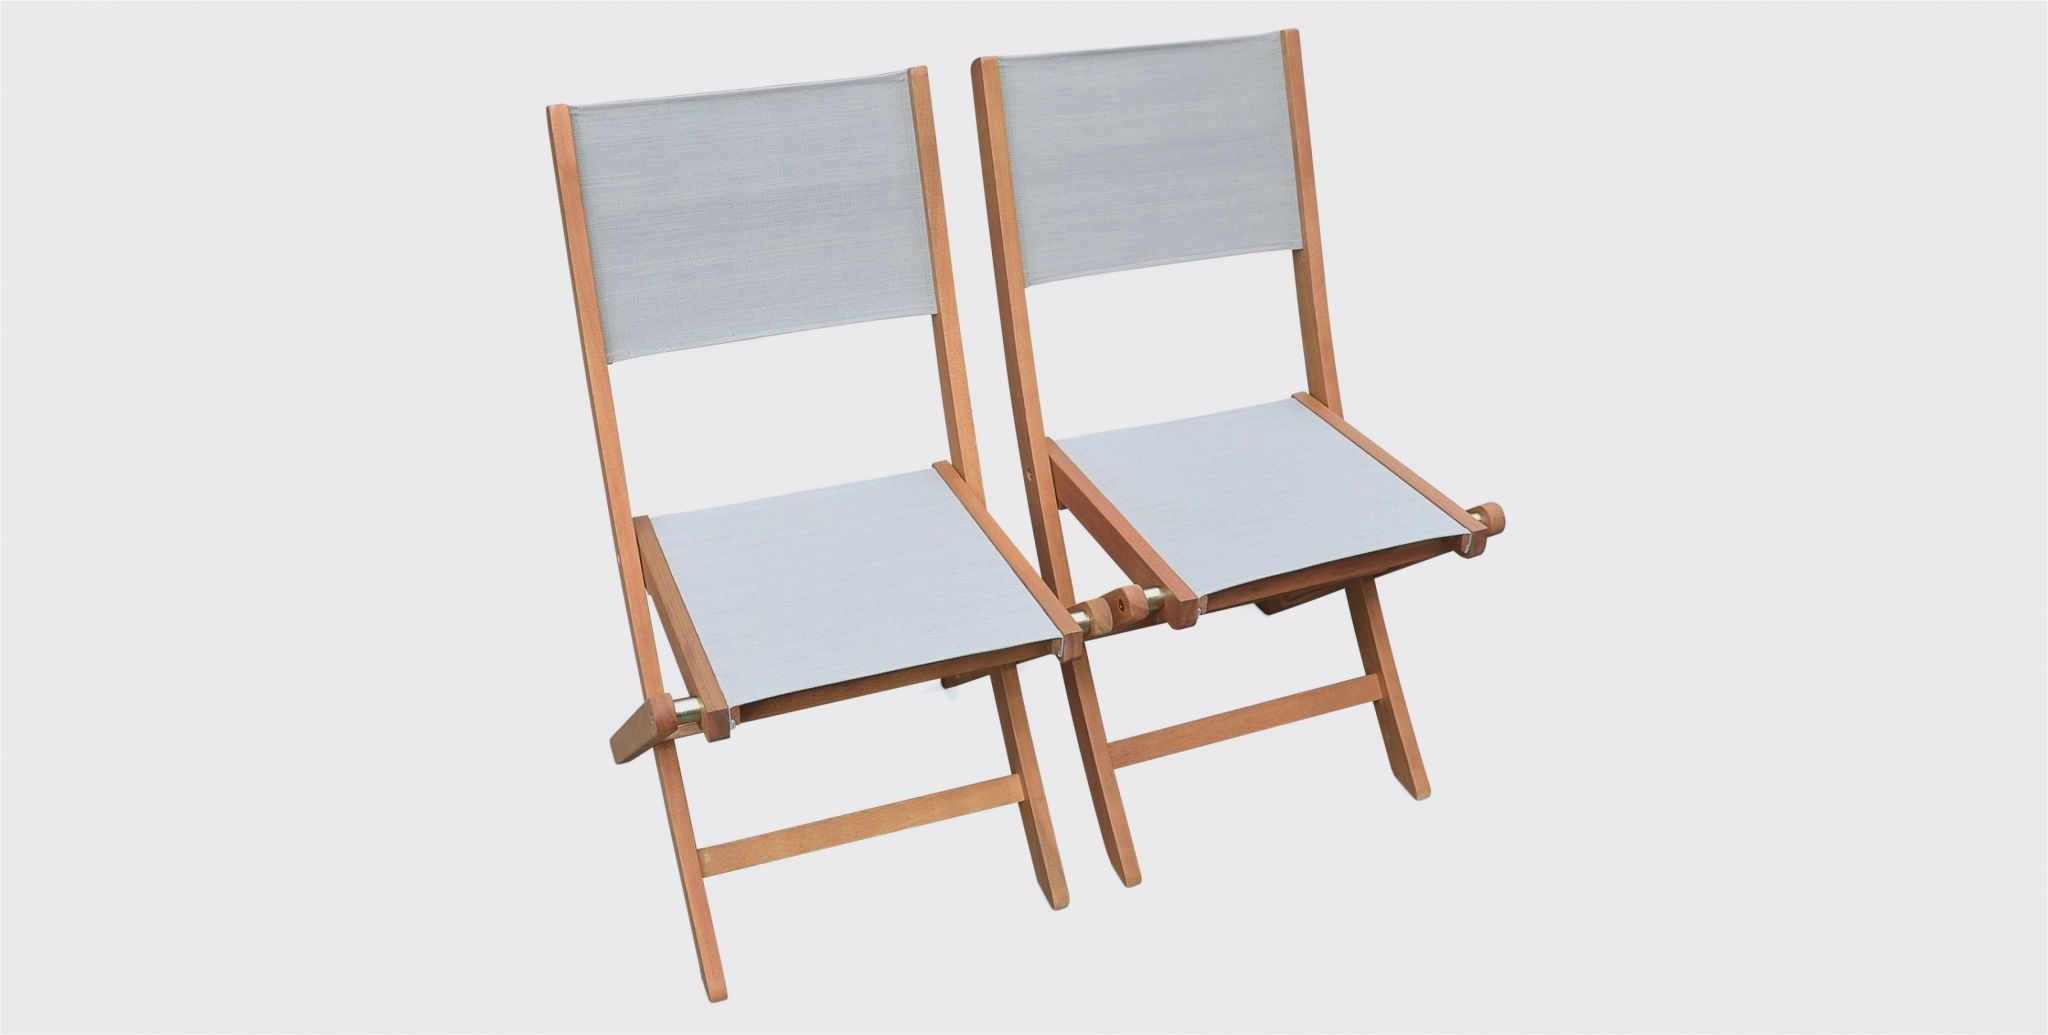 galette chaise jardin avec chaise lin chaise longue de jardin chaise style 0d coleymixan chaise de galette chaise jardin